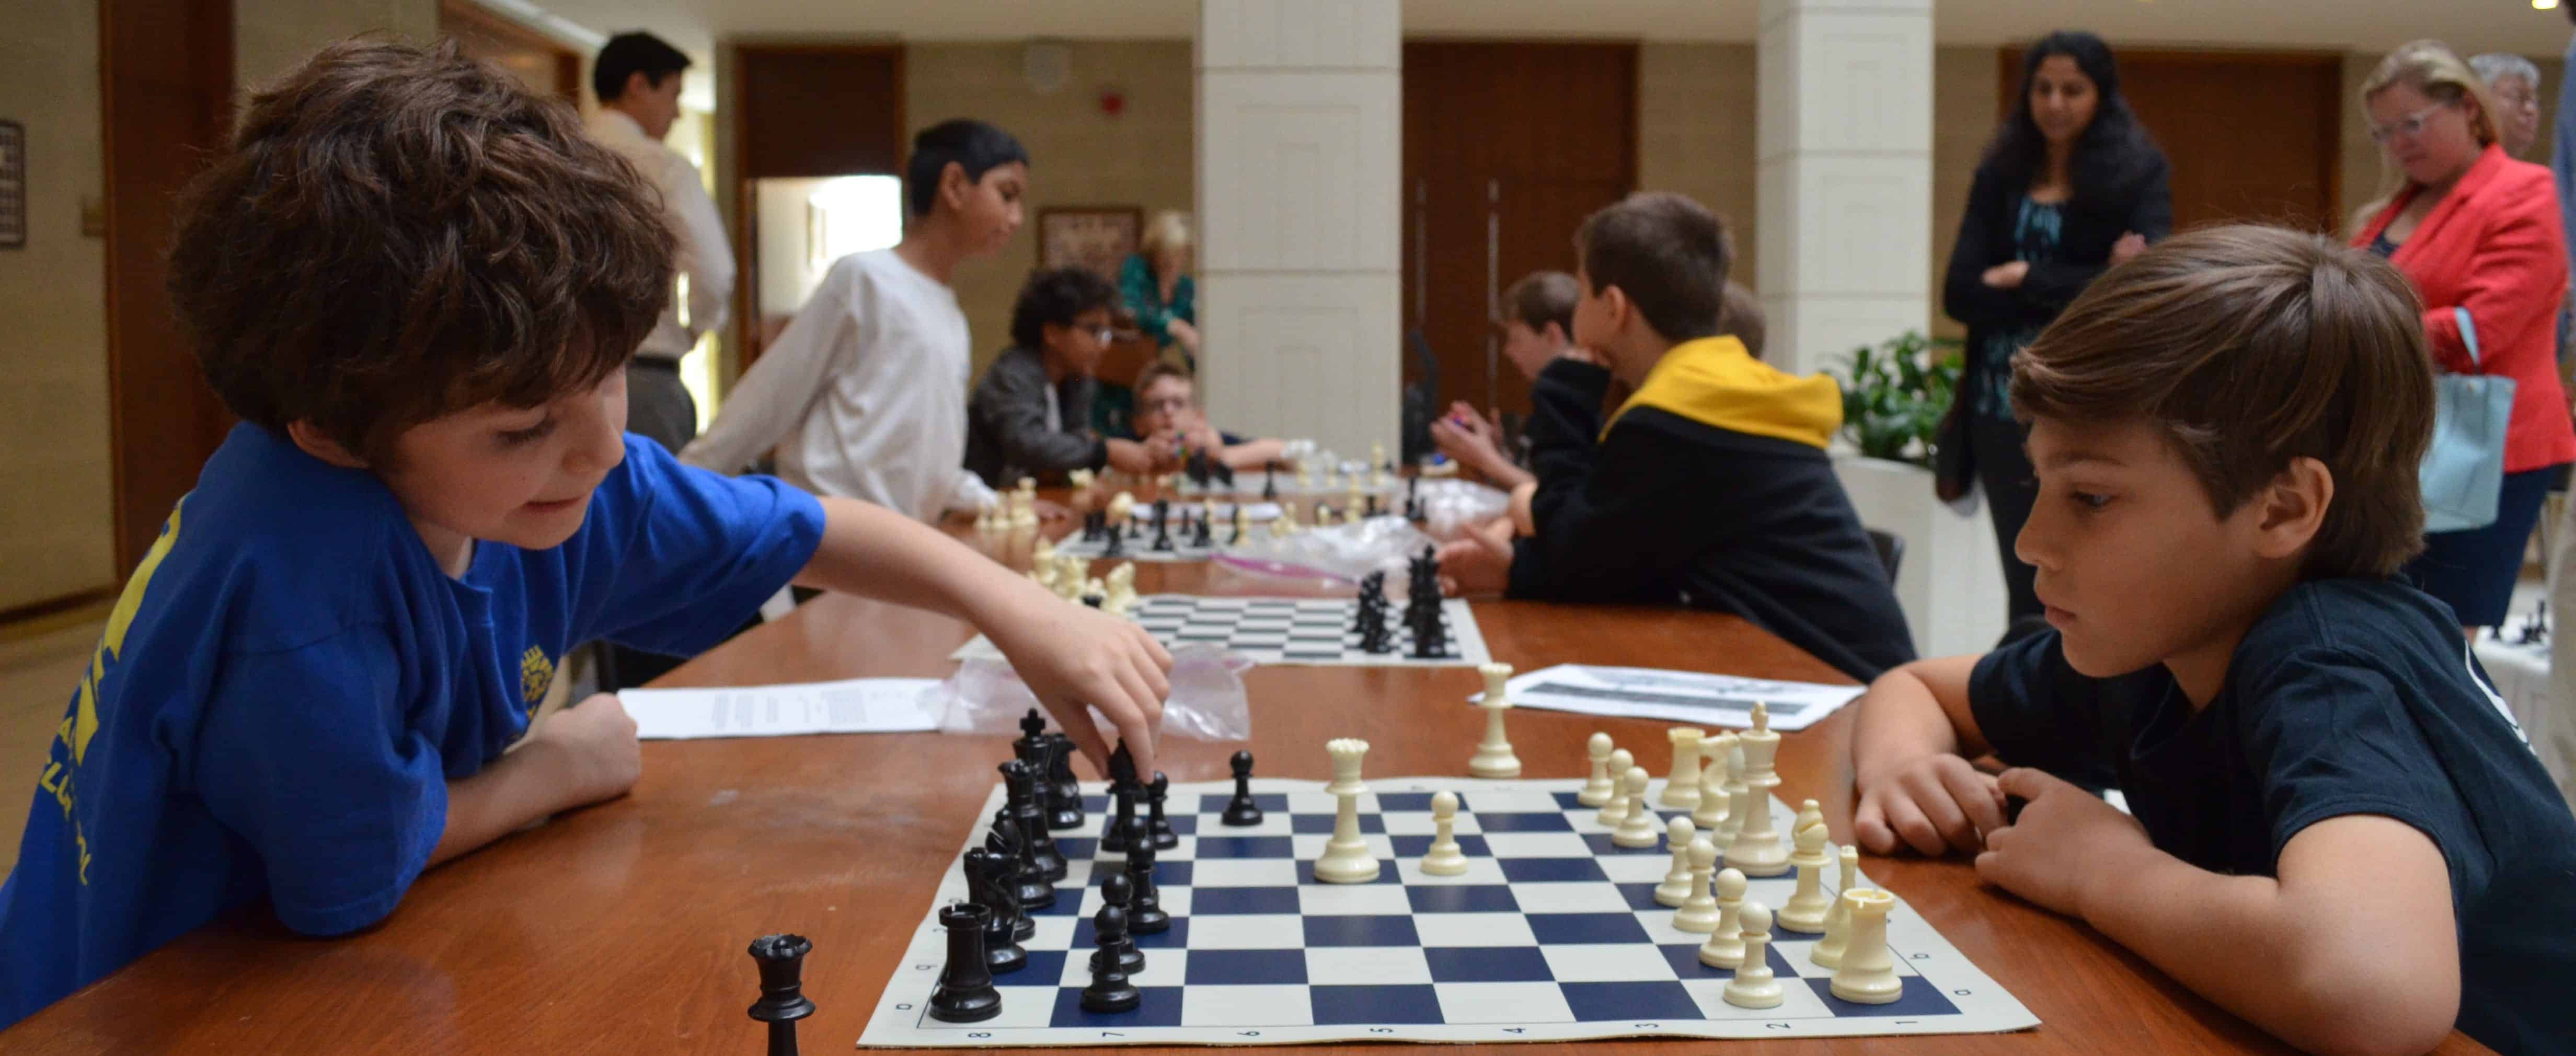 Chess students at the legislature